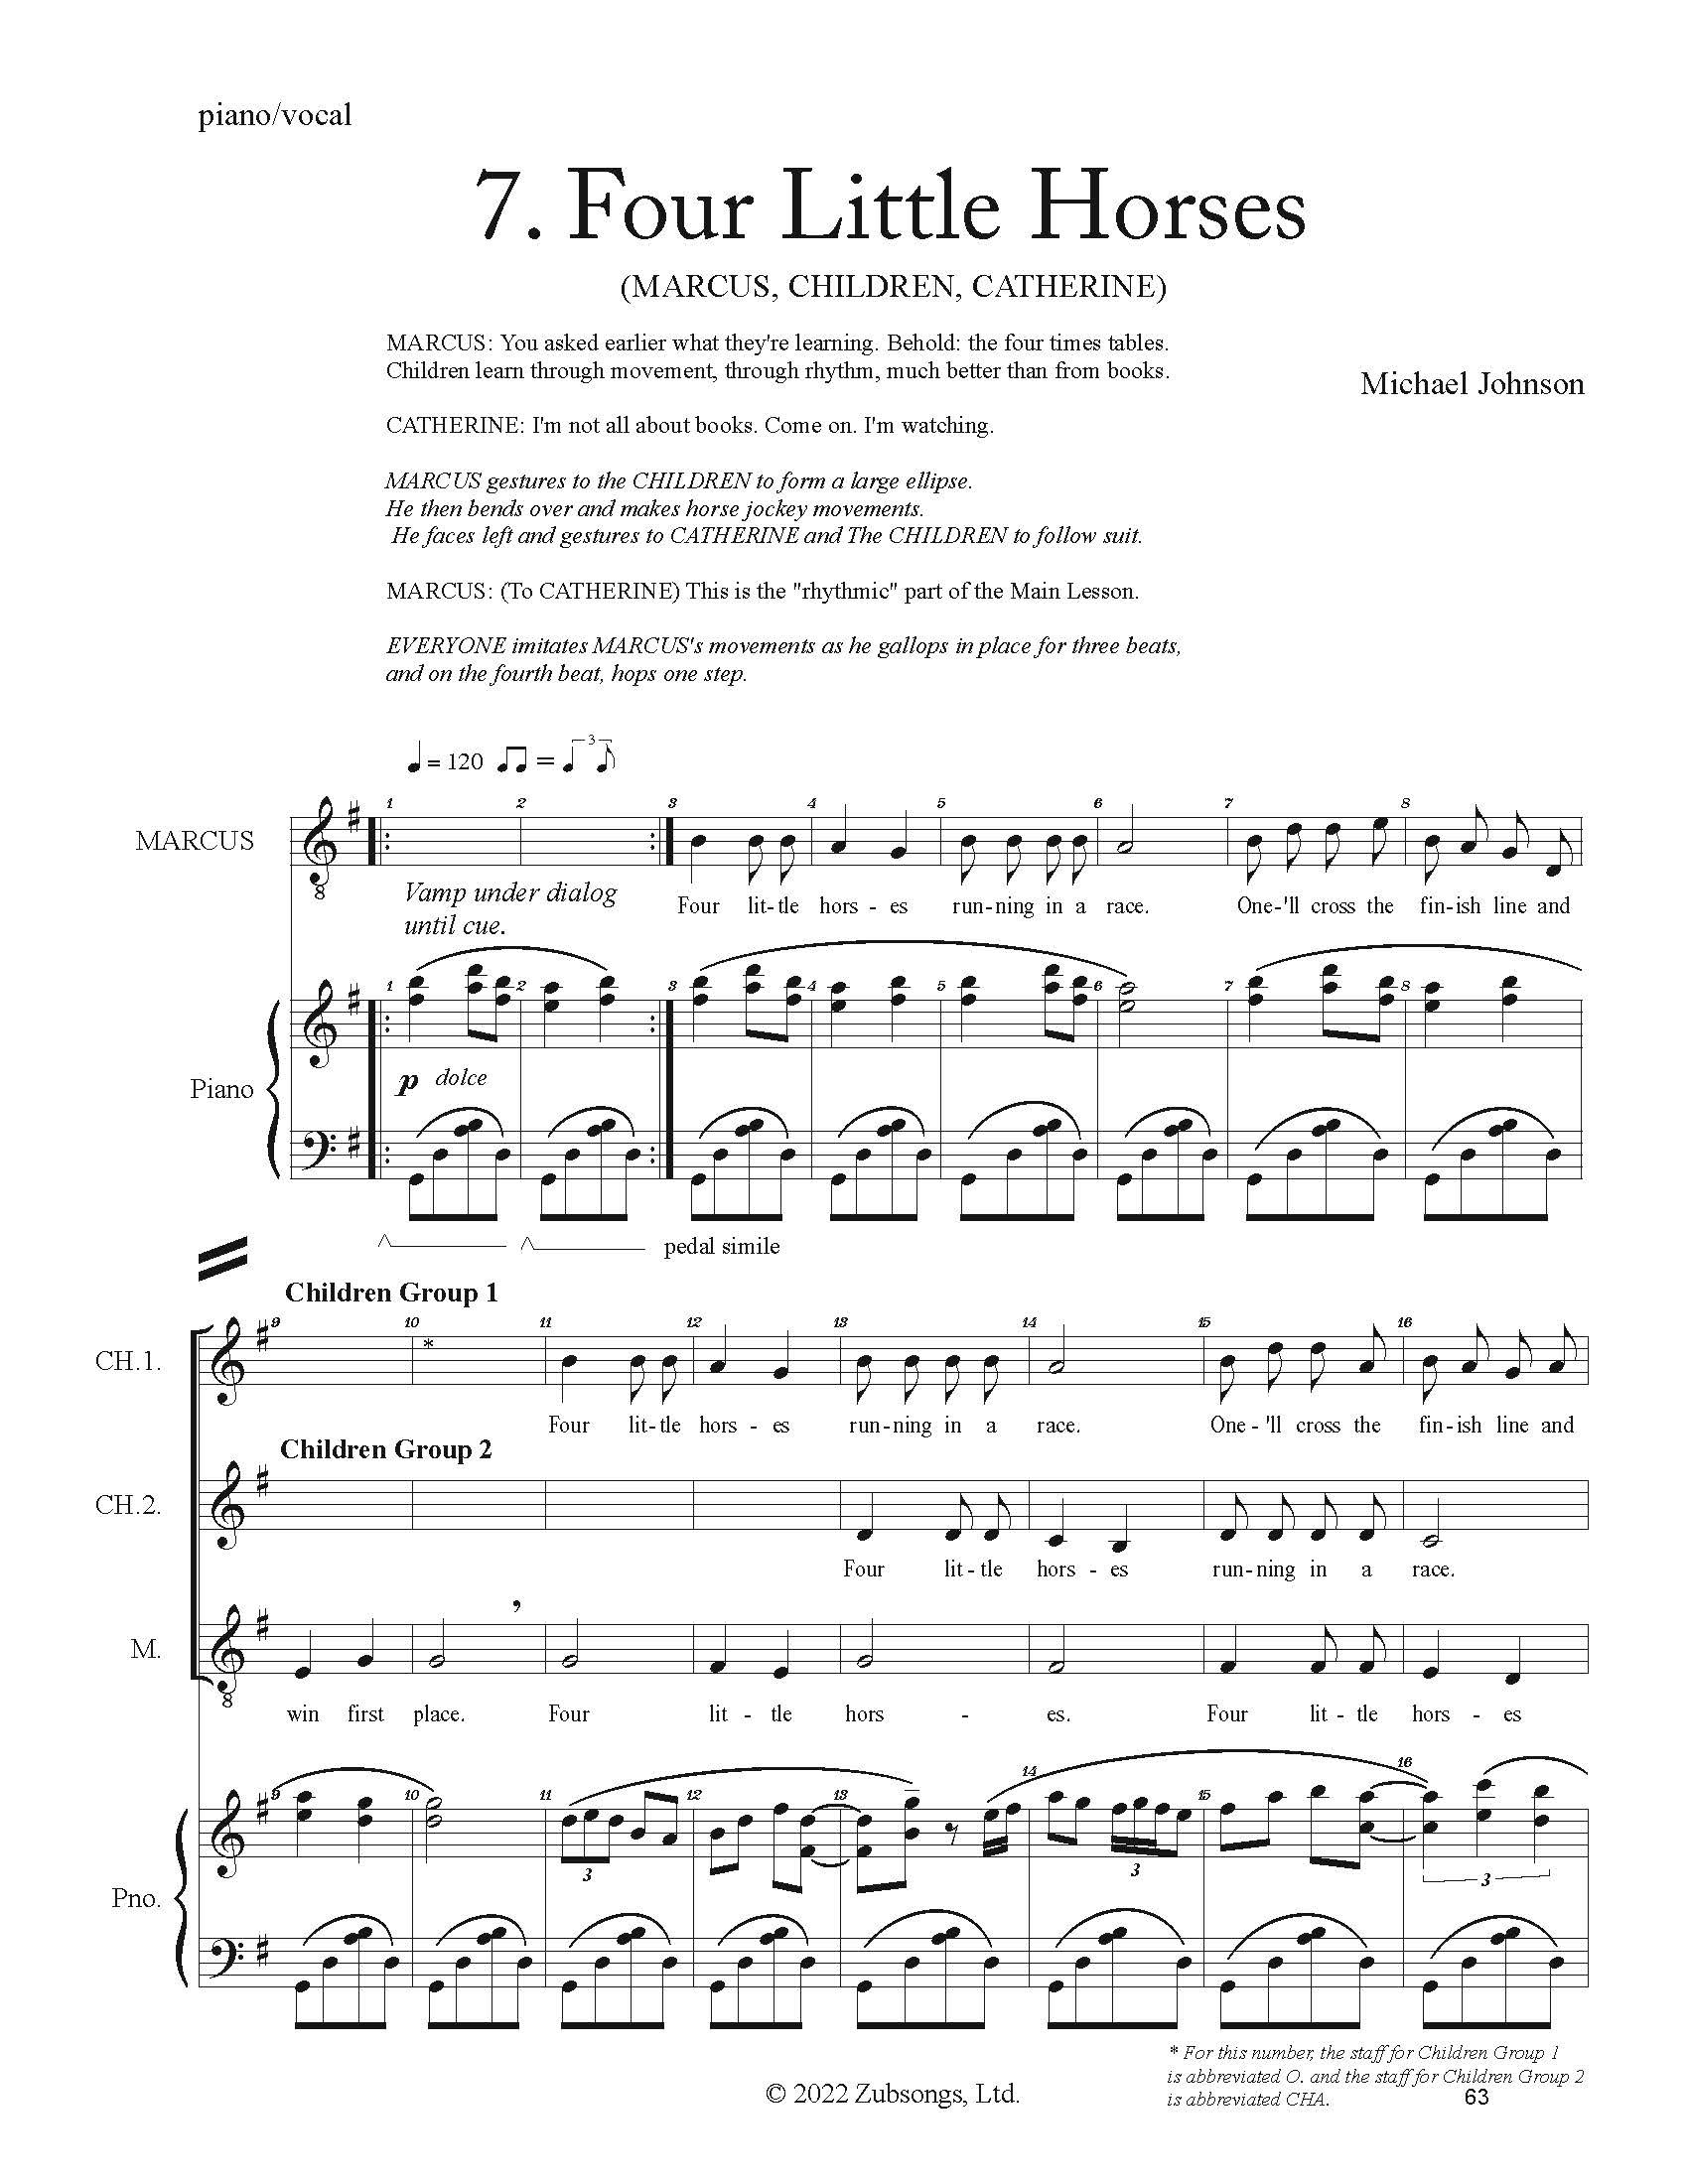 FULL PIANO VOCAL SCORE DRAFT 1 - Score_Page_063.jpg